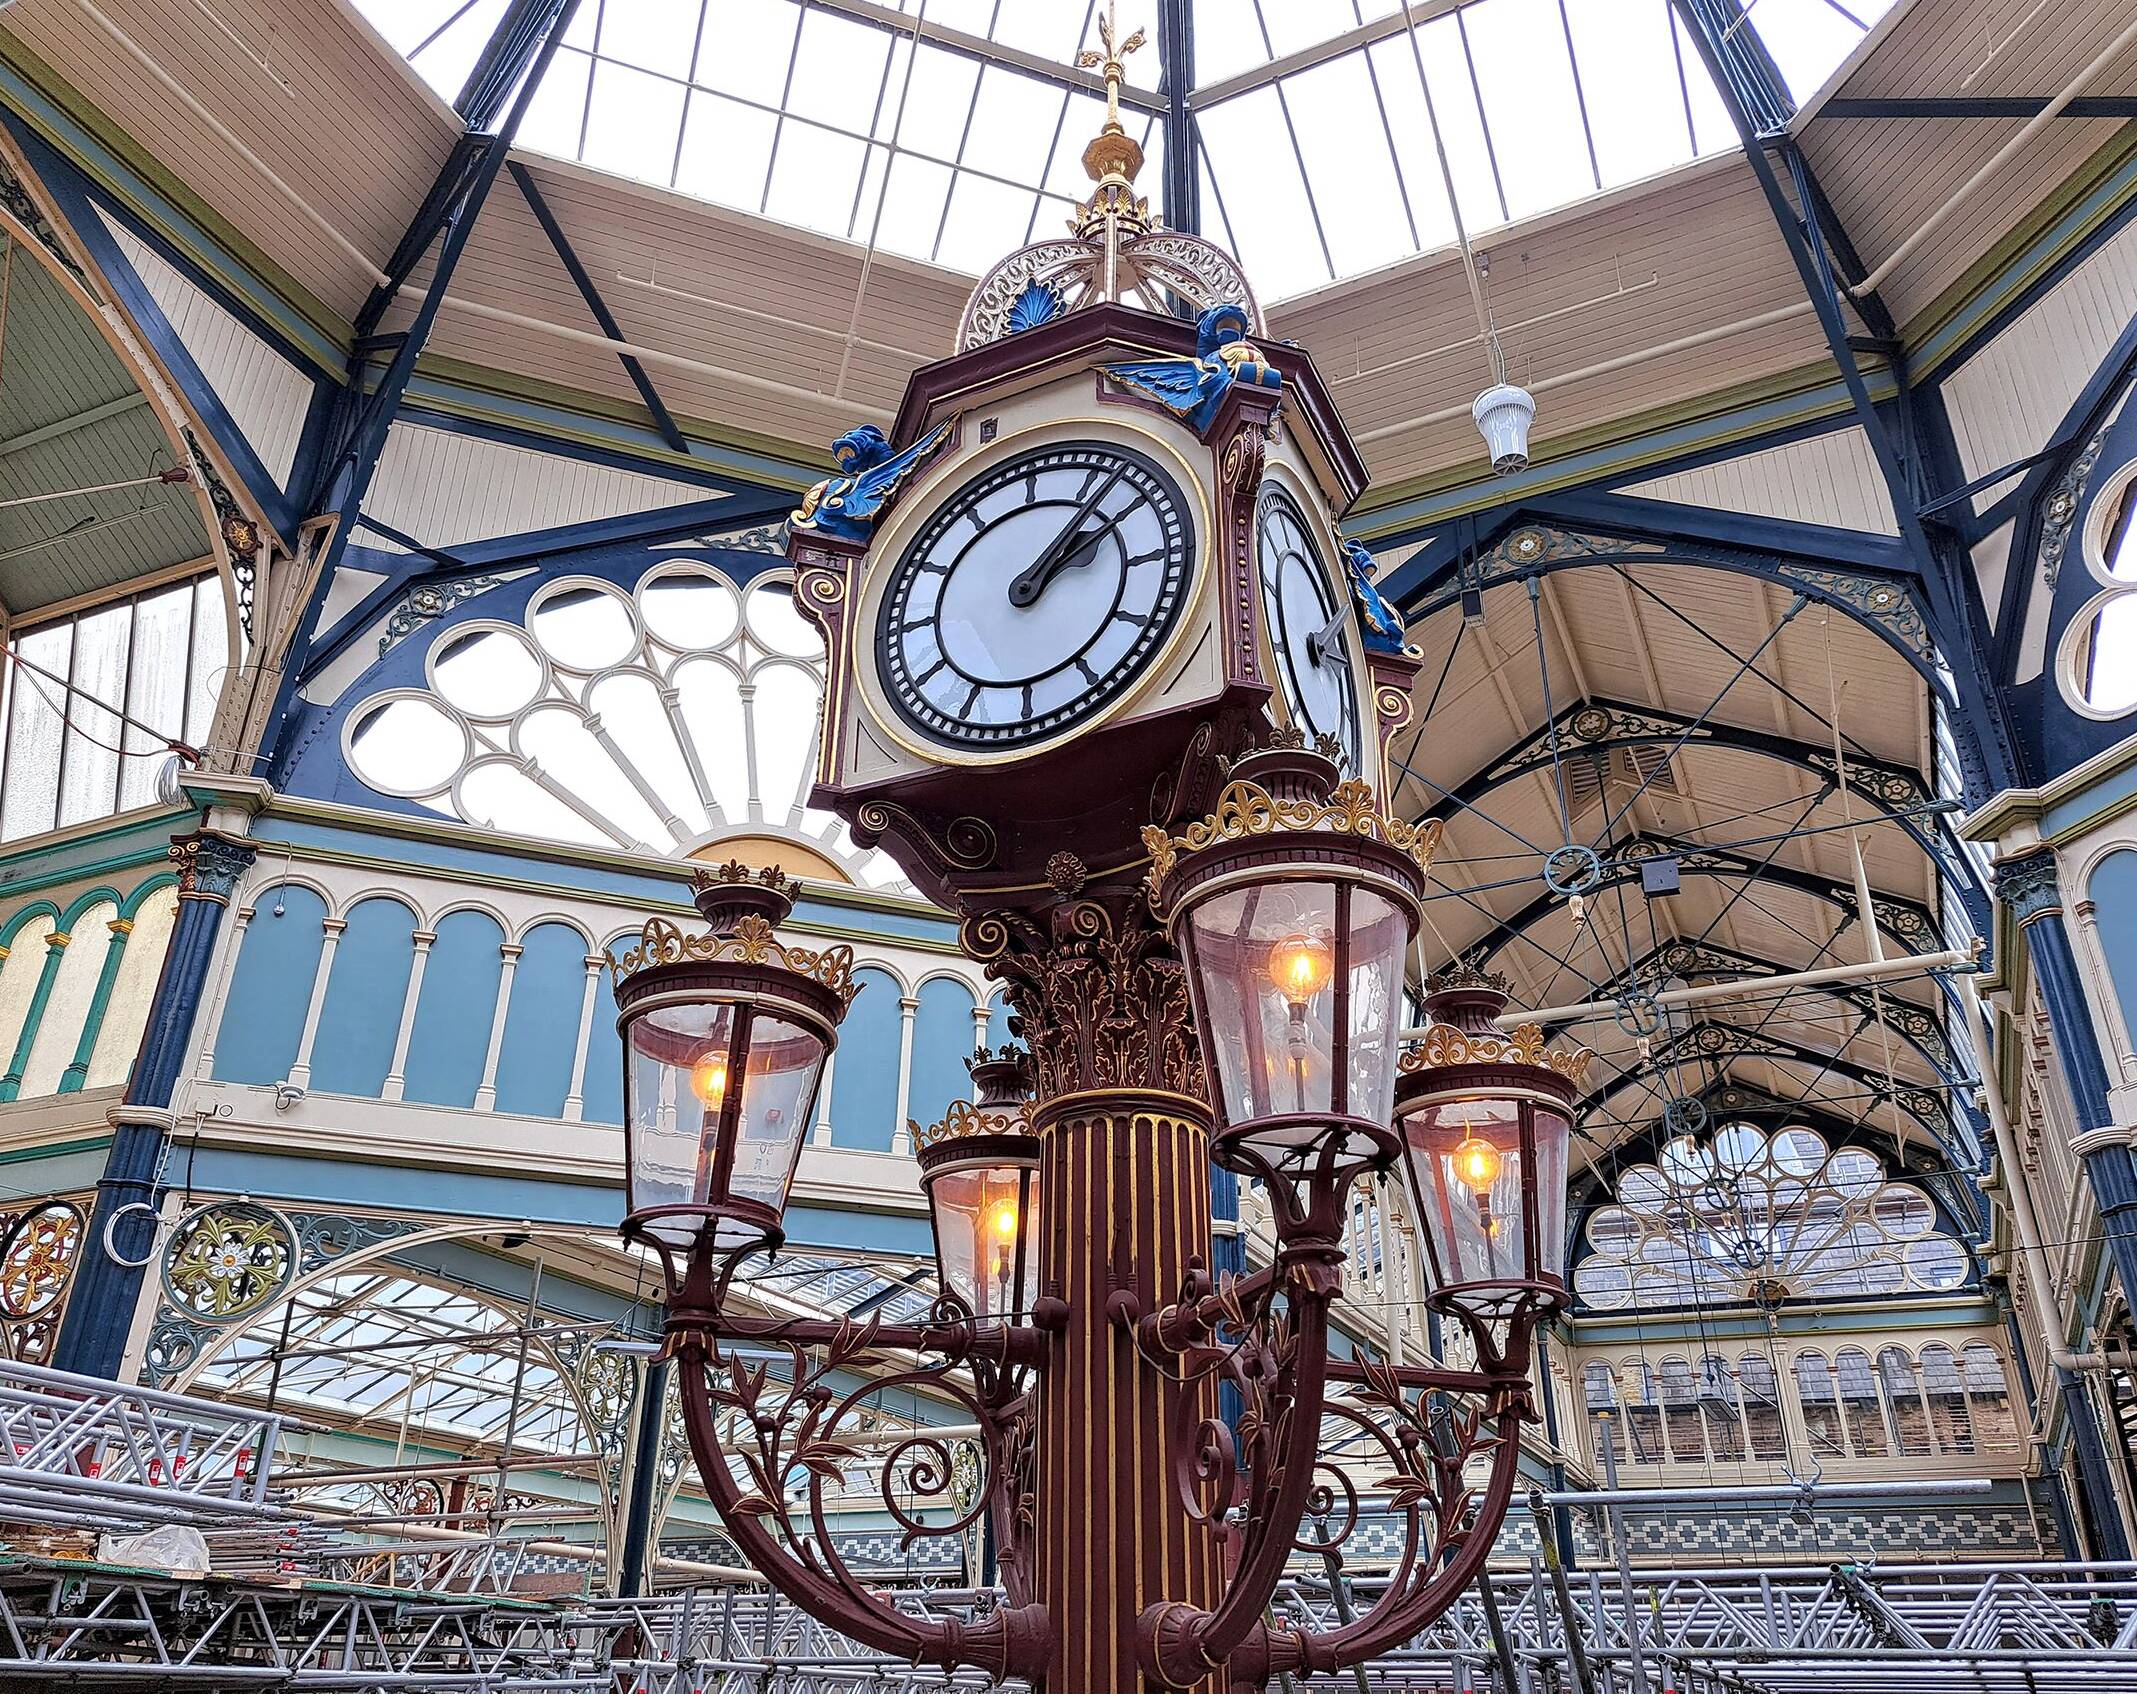 Historic clock inside Halifax Borough Market